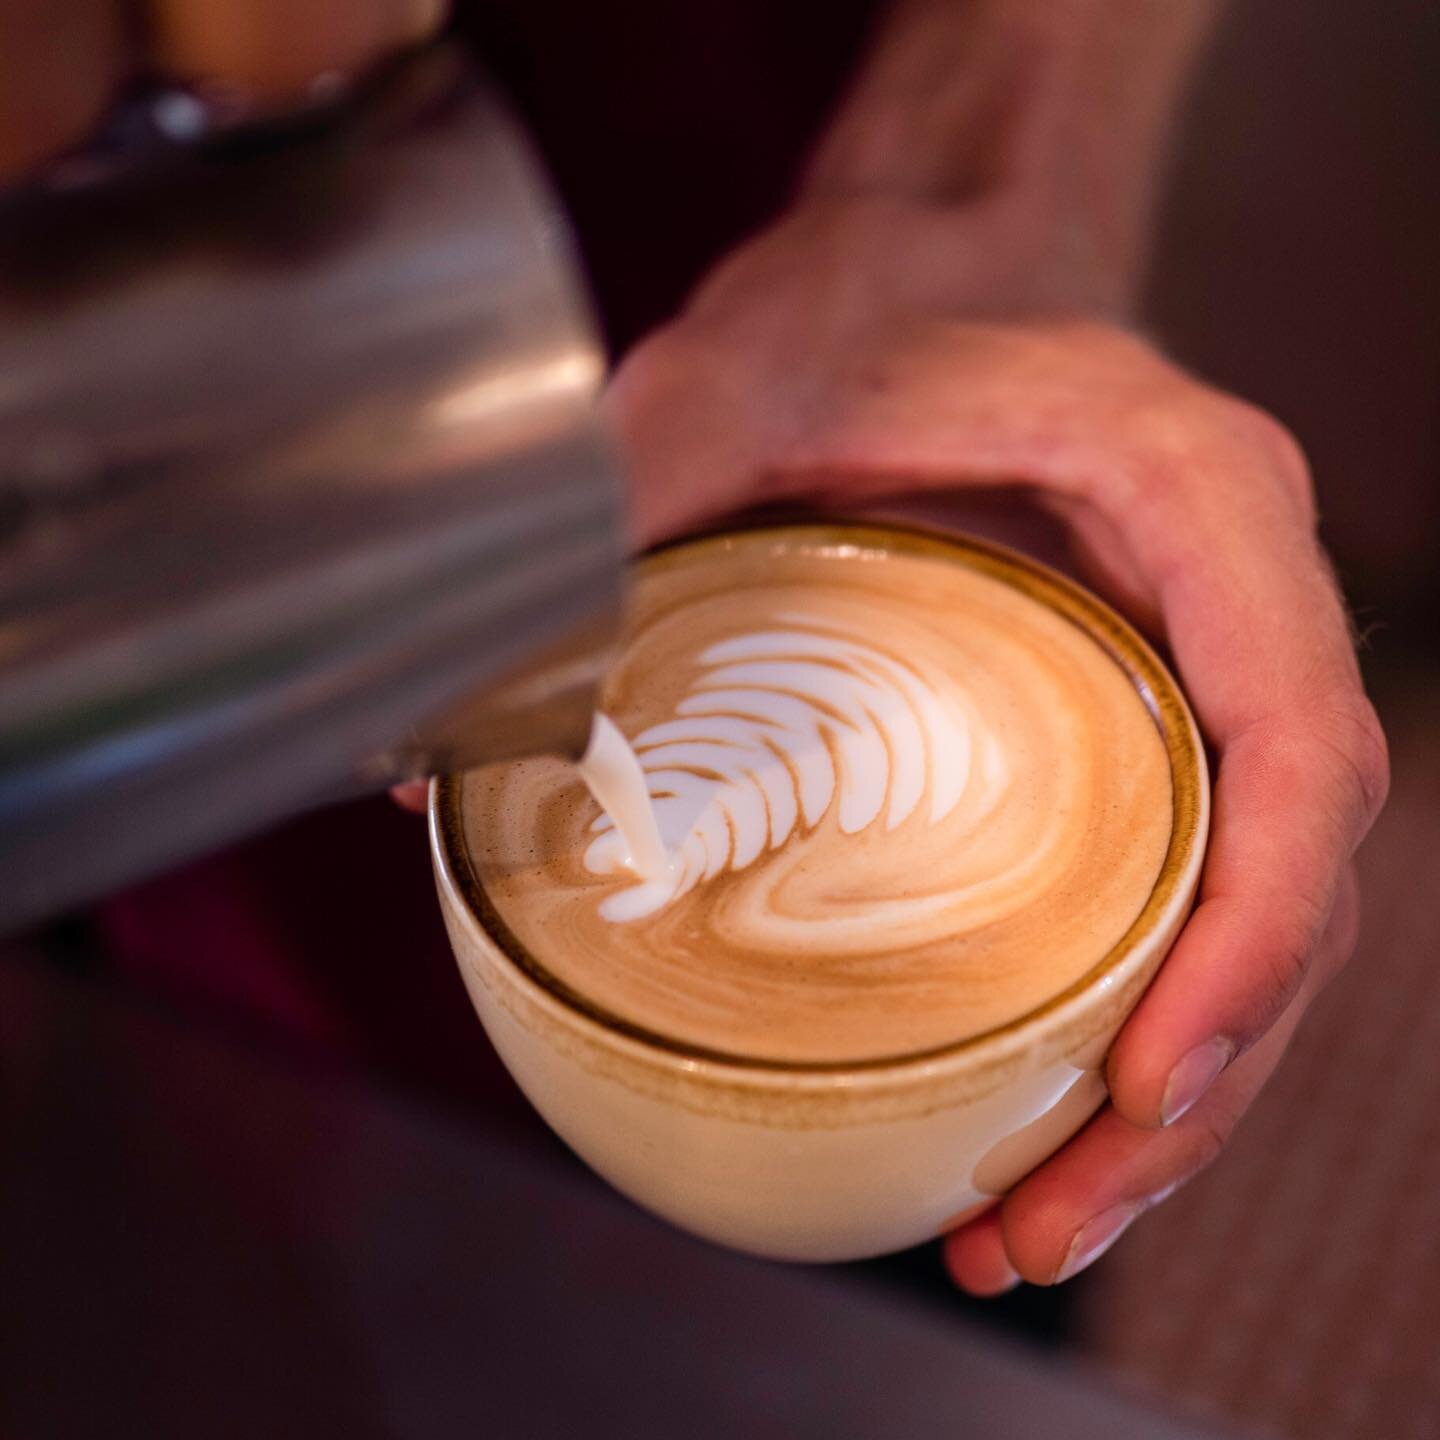 Need coffee? We got you covered...⚡️
&bull;
@byronbaycoffeecompany ☕️